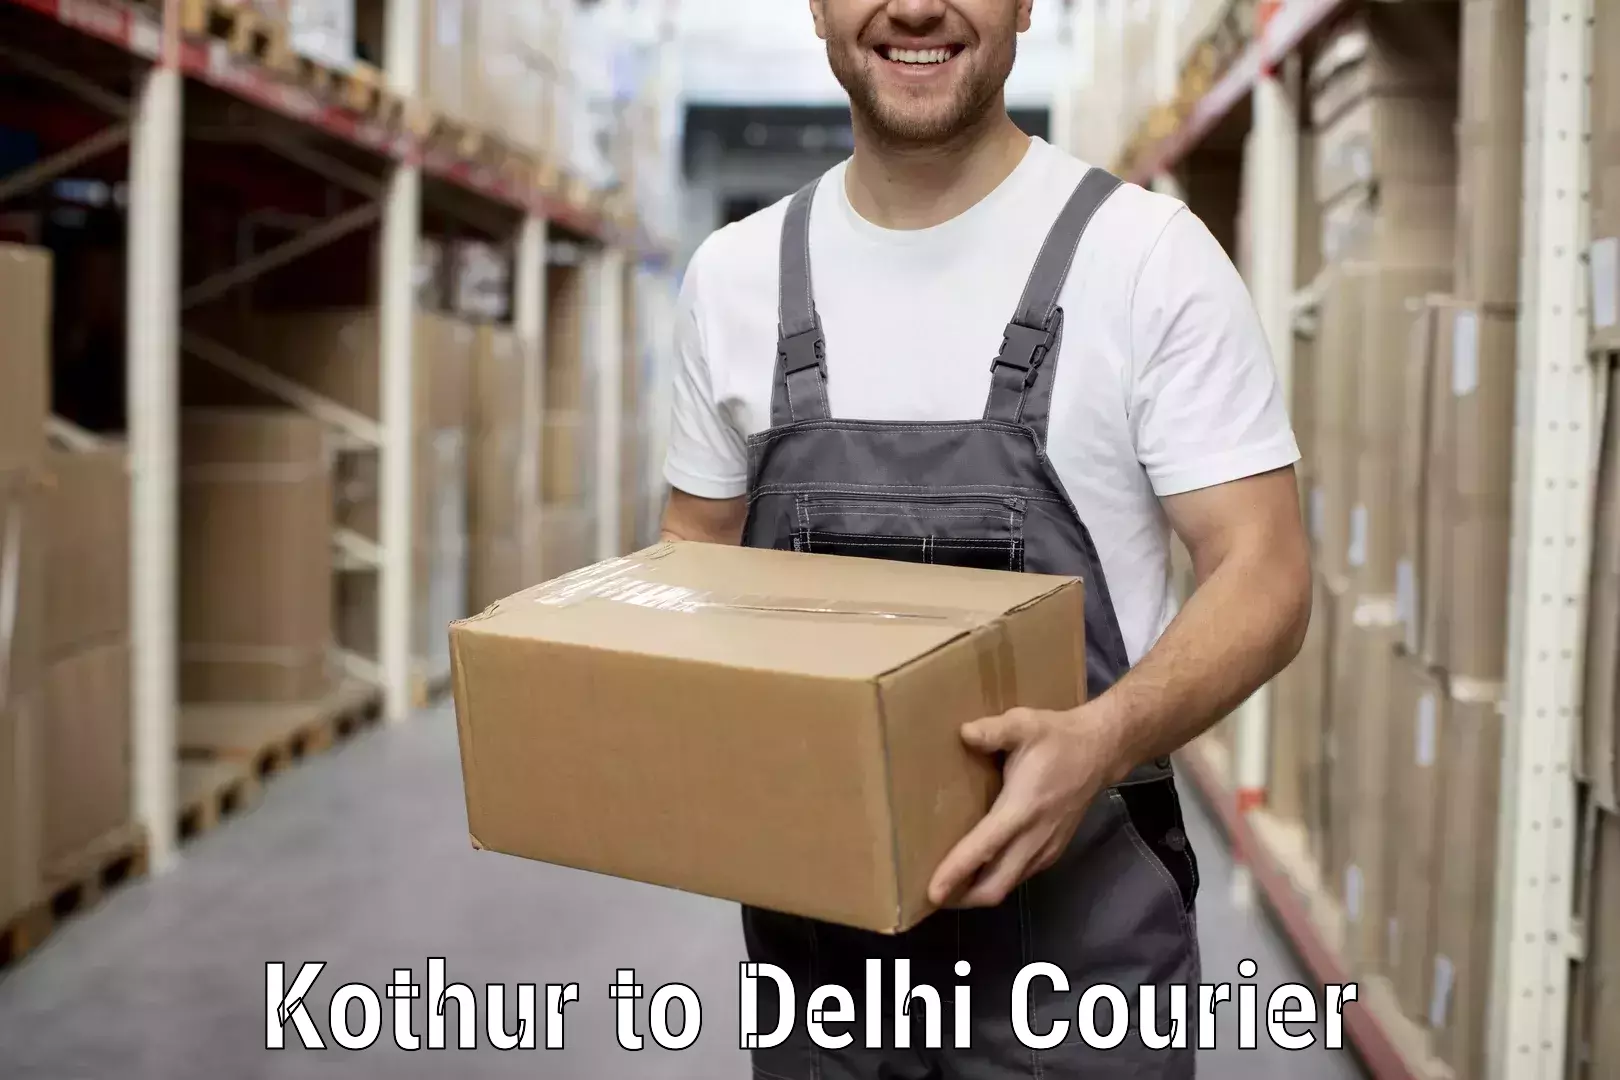 Professional moving company Kothur to University of Delhi